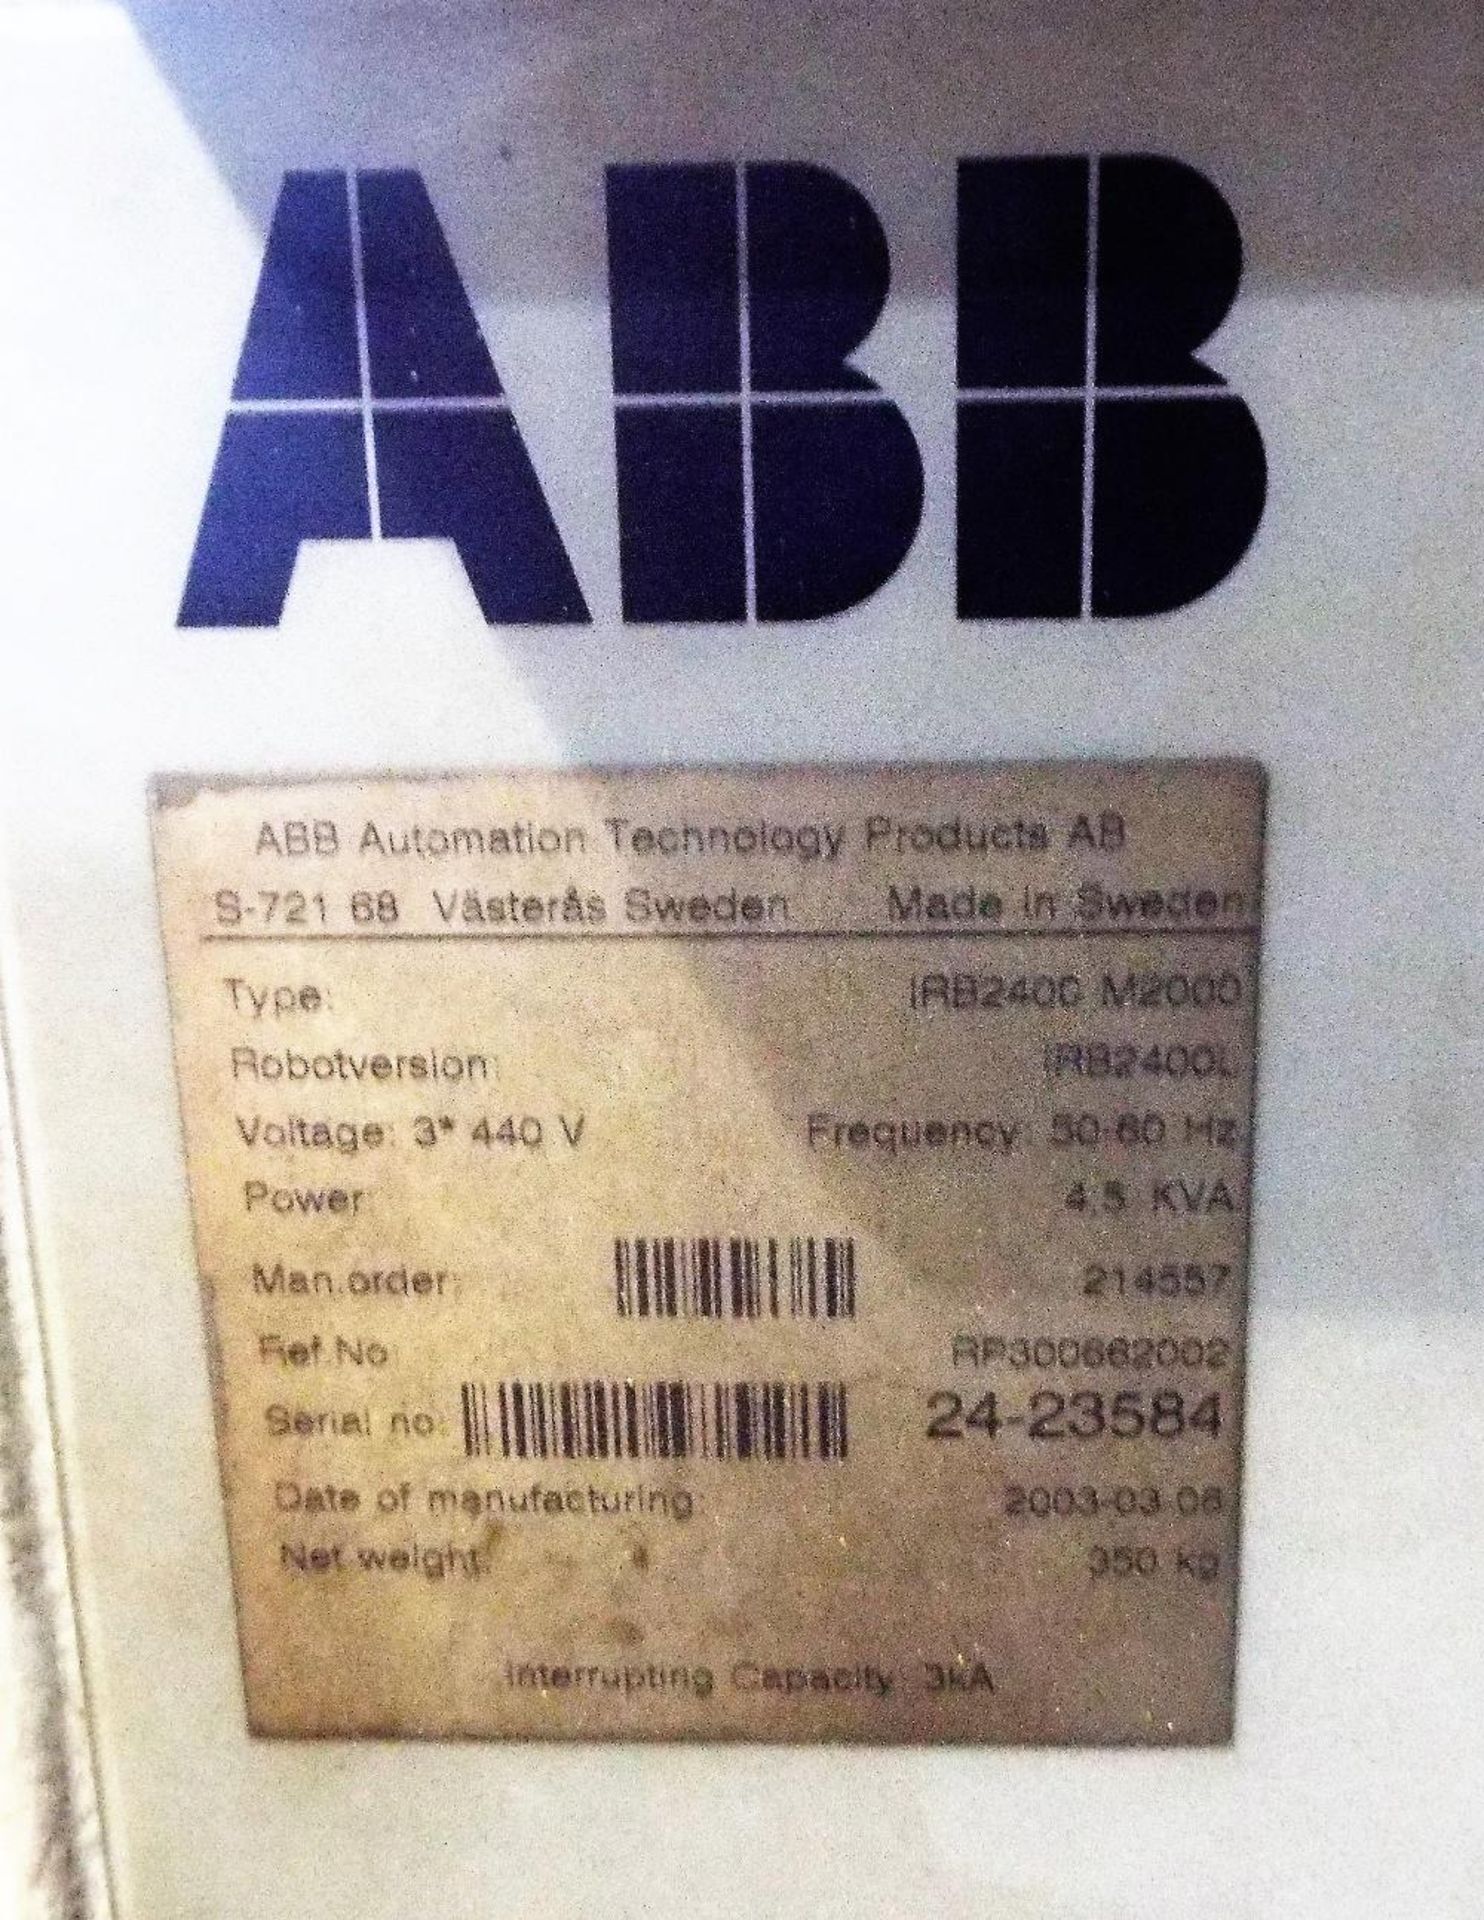 ABB-IRB-2400L MIG WELDING EQUIPMENT - Image 5 of 17